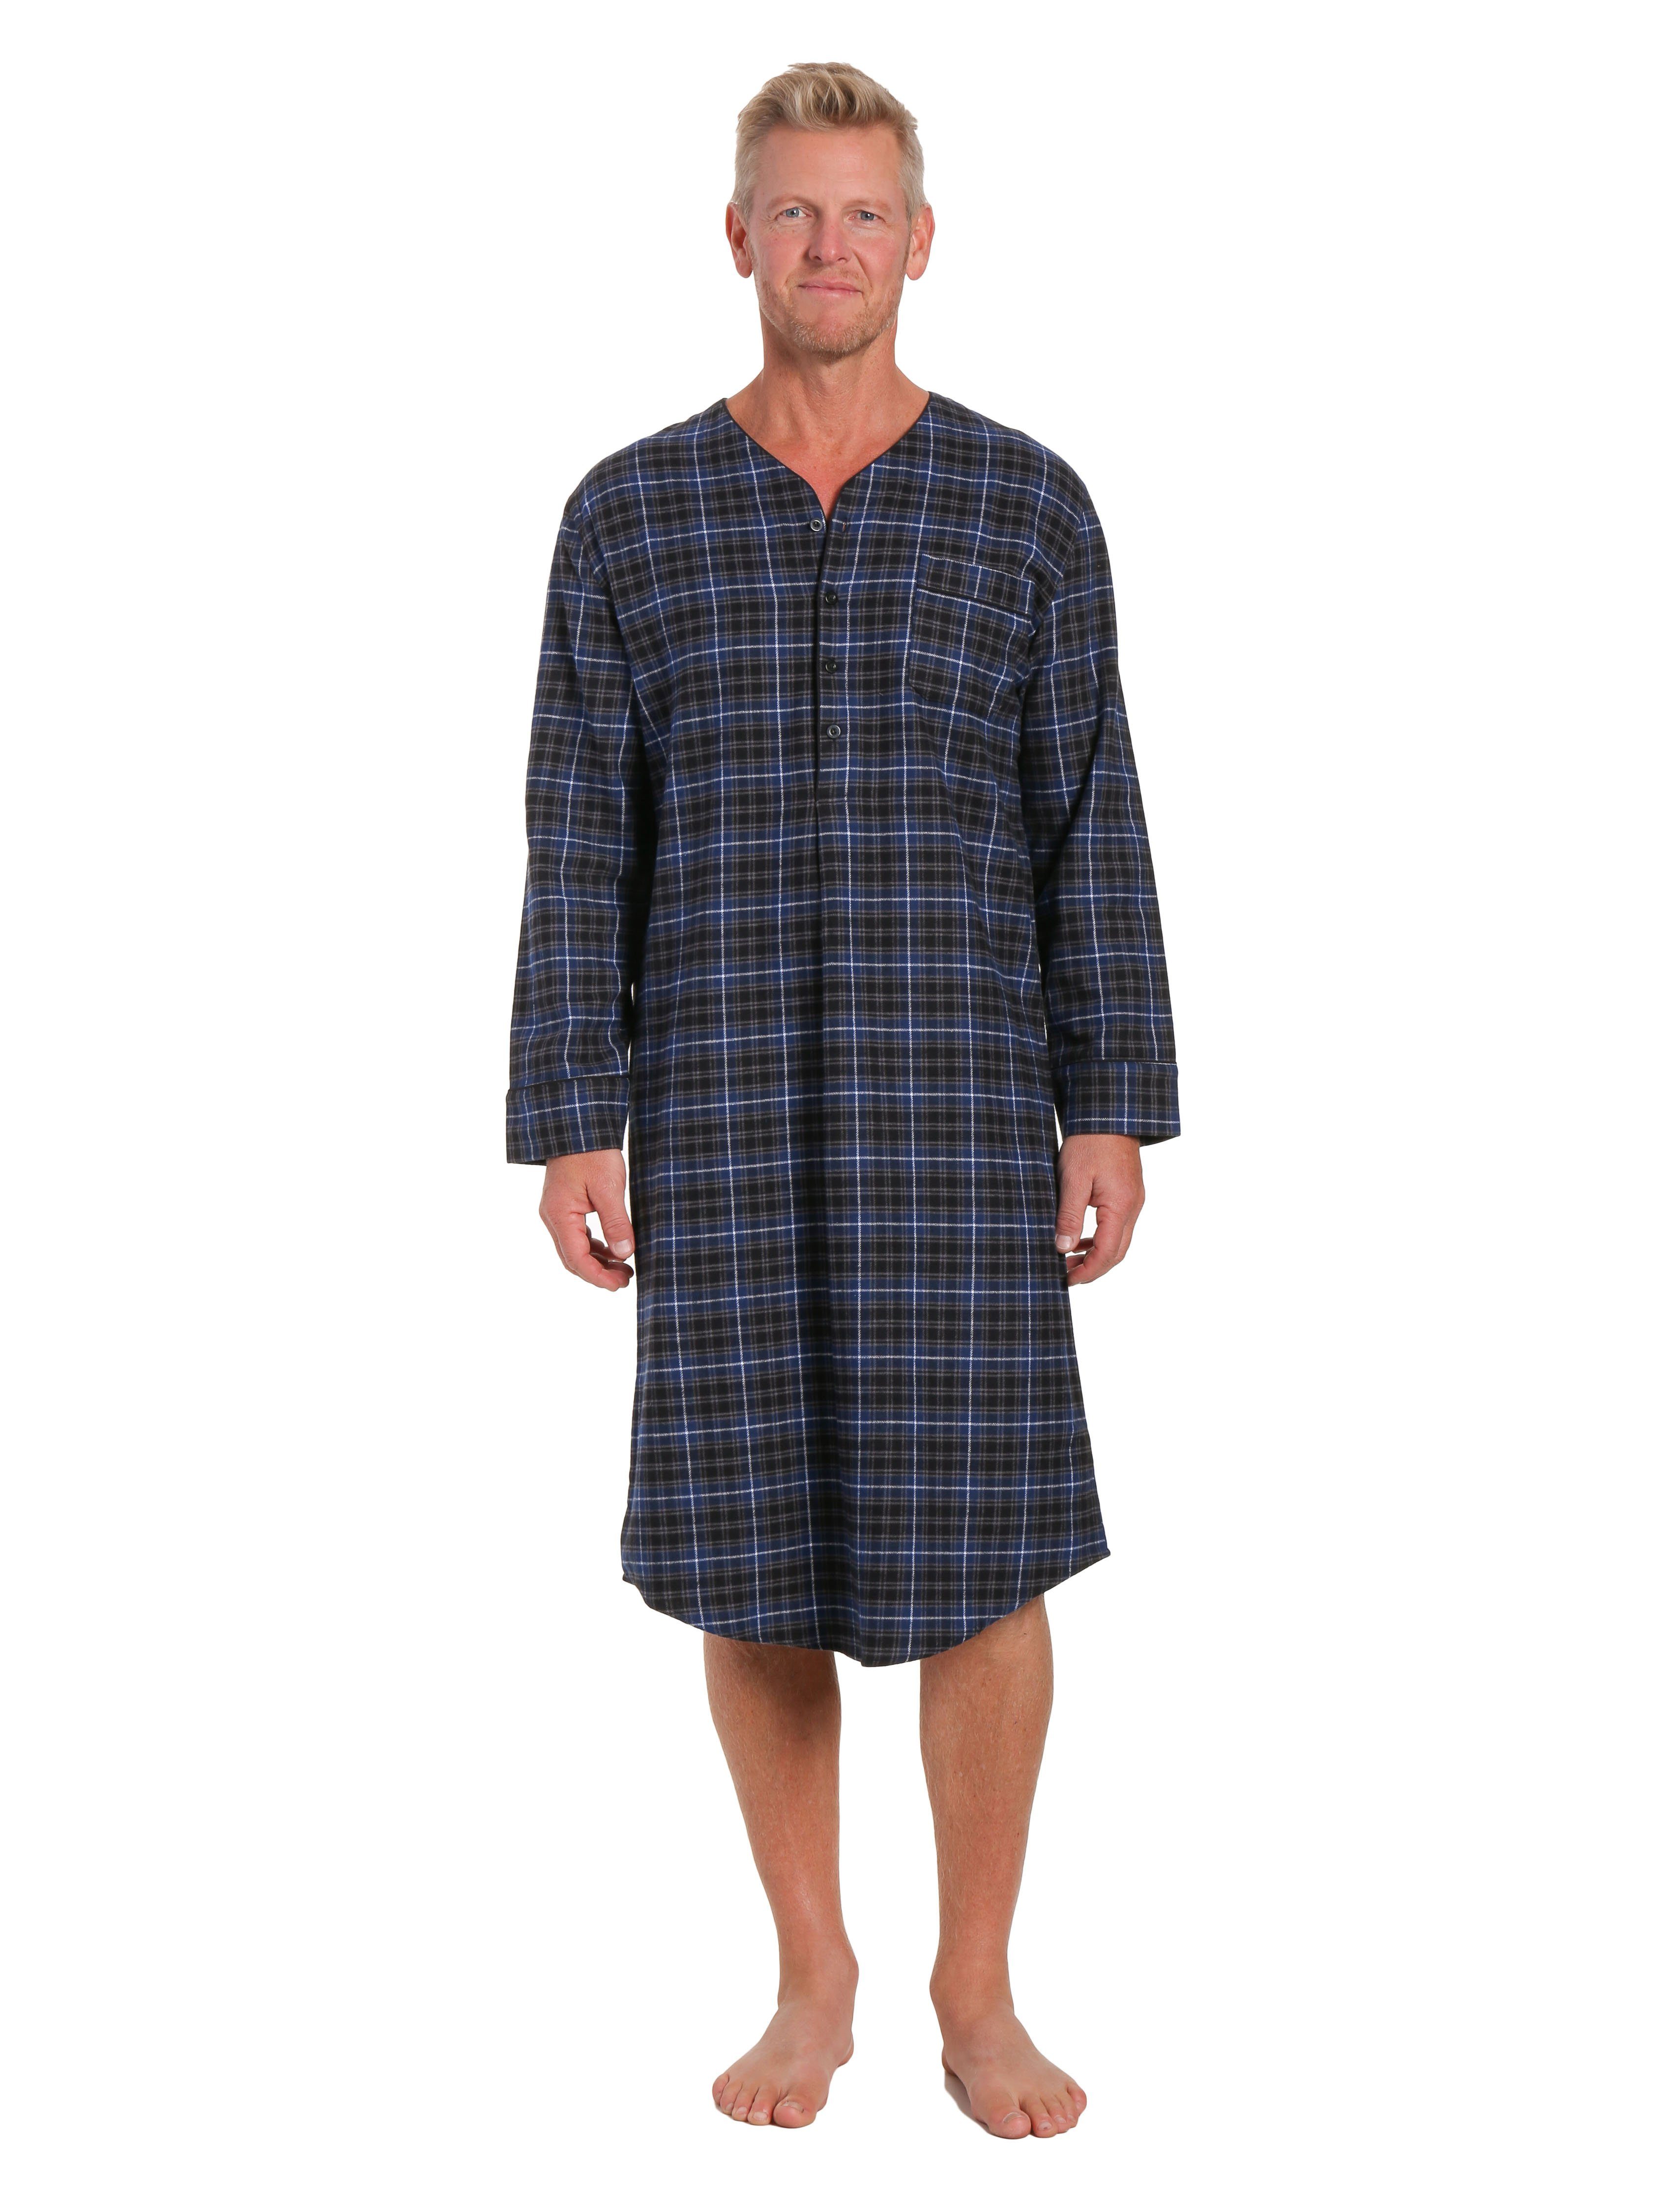 Mens Nightshirt - 100% Cotton Flannel Mens Nightshirts for